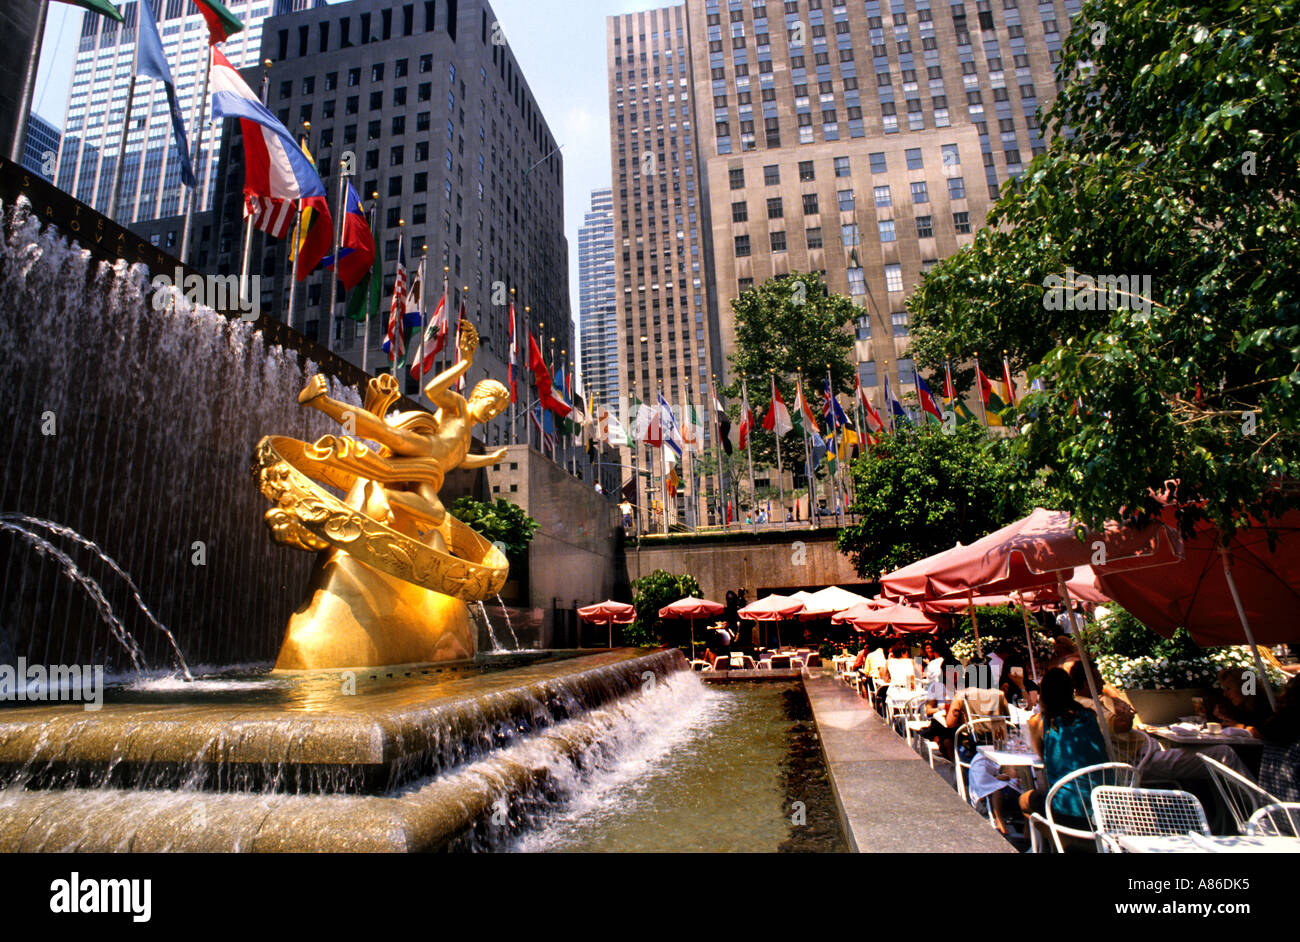 new-york-manhattan-rockefeller-plaza-statue-of-prometheus-god-of-fire-A86DK5.jpg